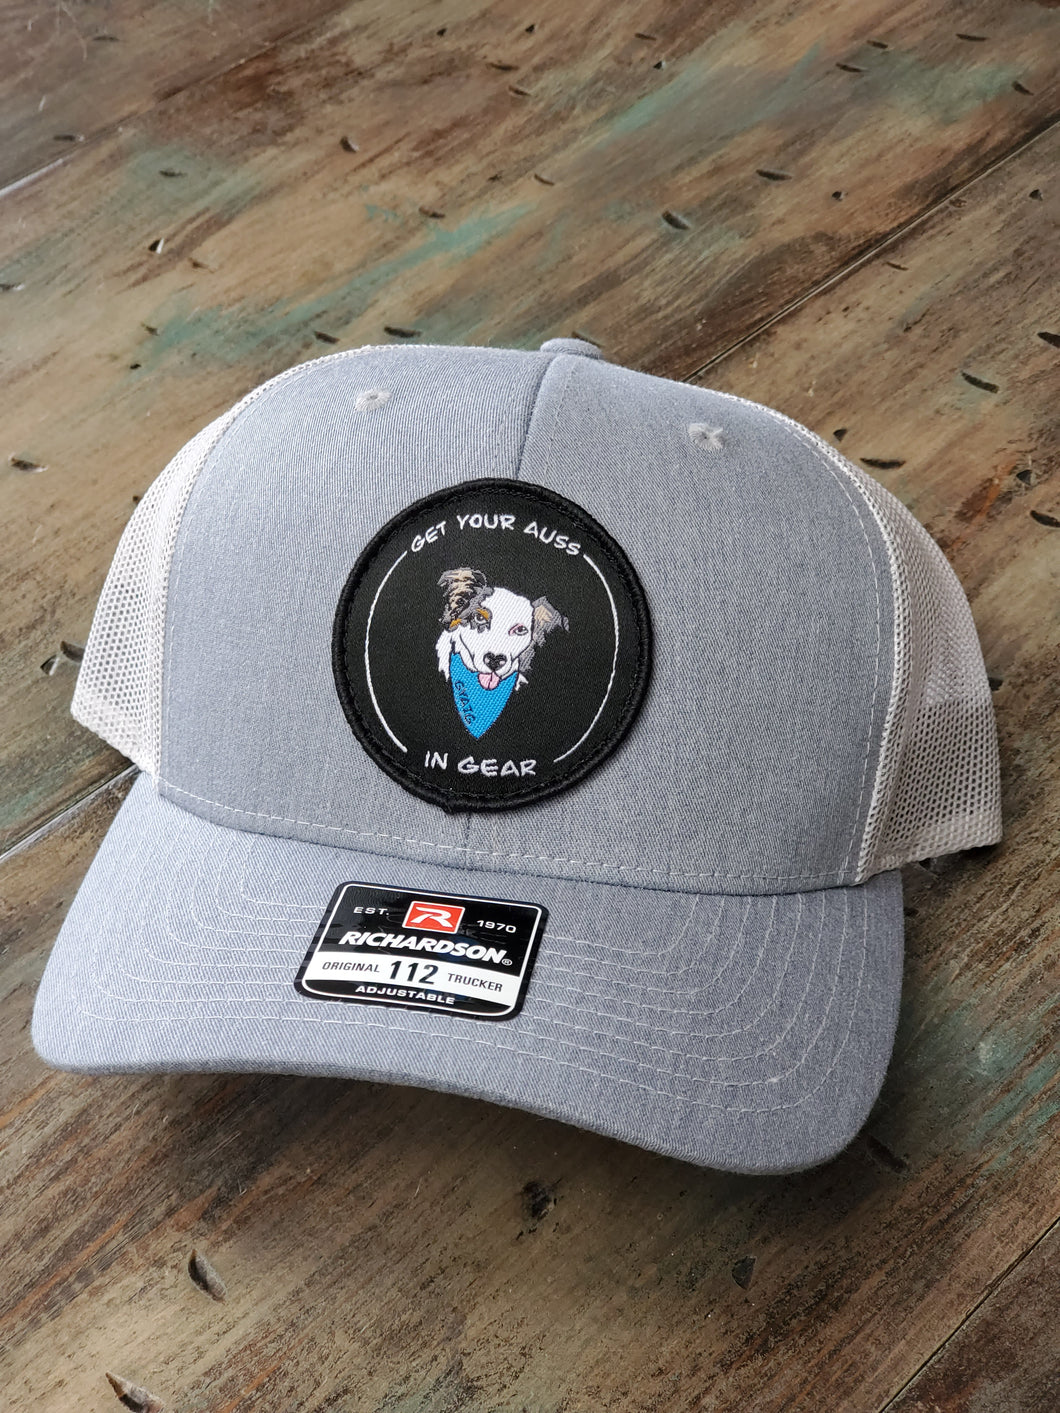 Get Your Auss In Gear Unisex / Men's Hat